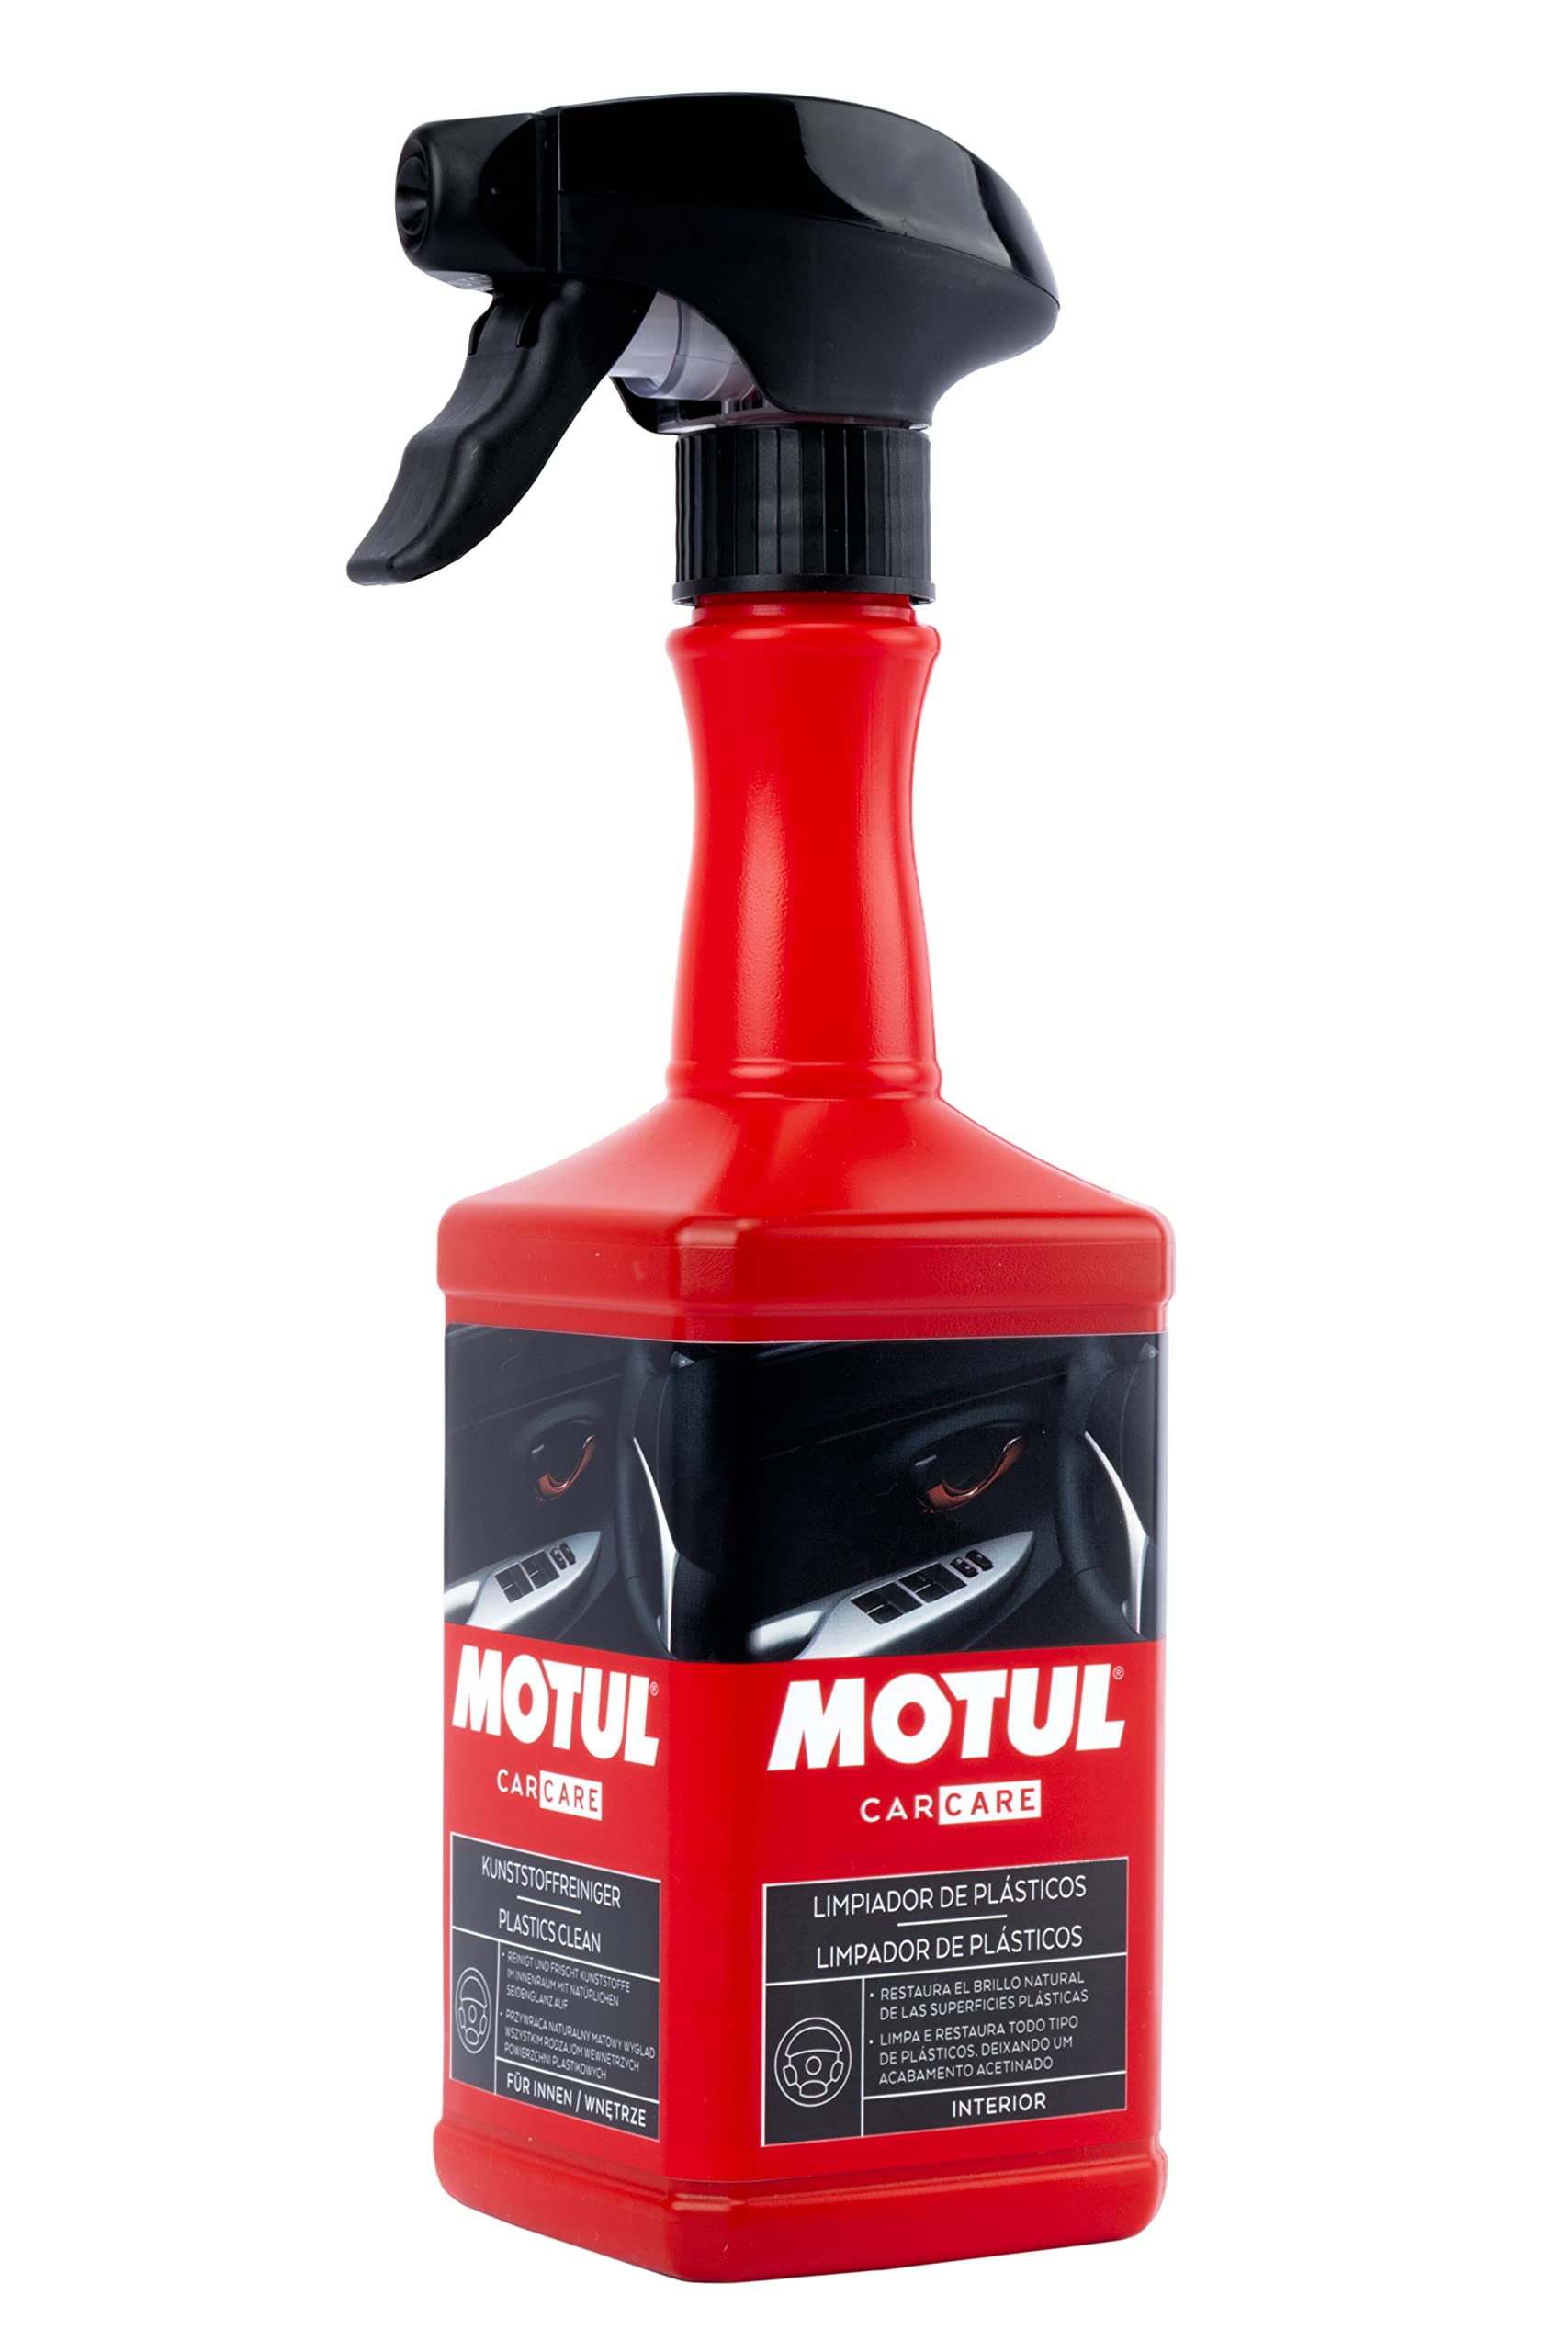 Motul Car Care Kunststoff-Reiniger 500 ml von Motul